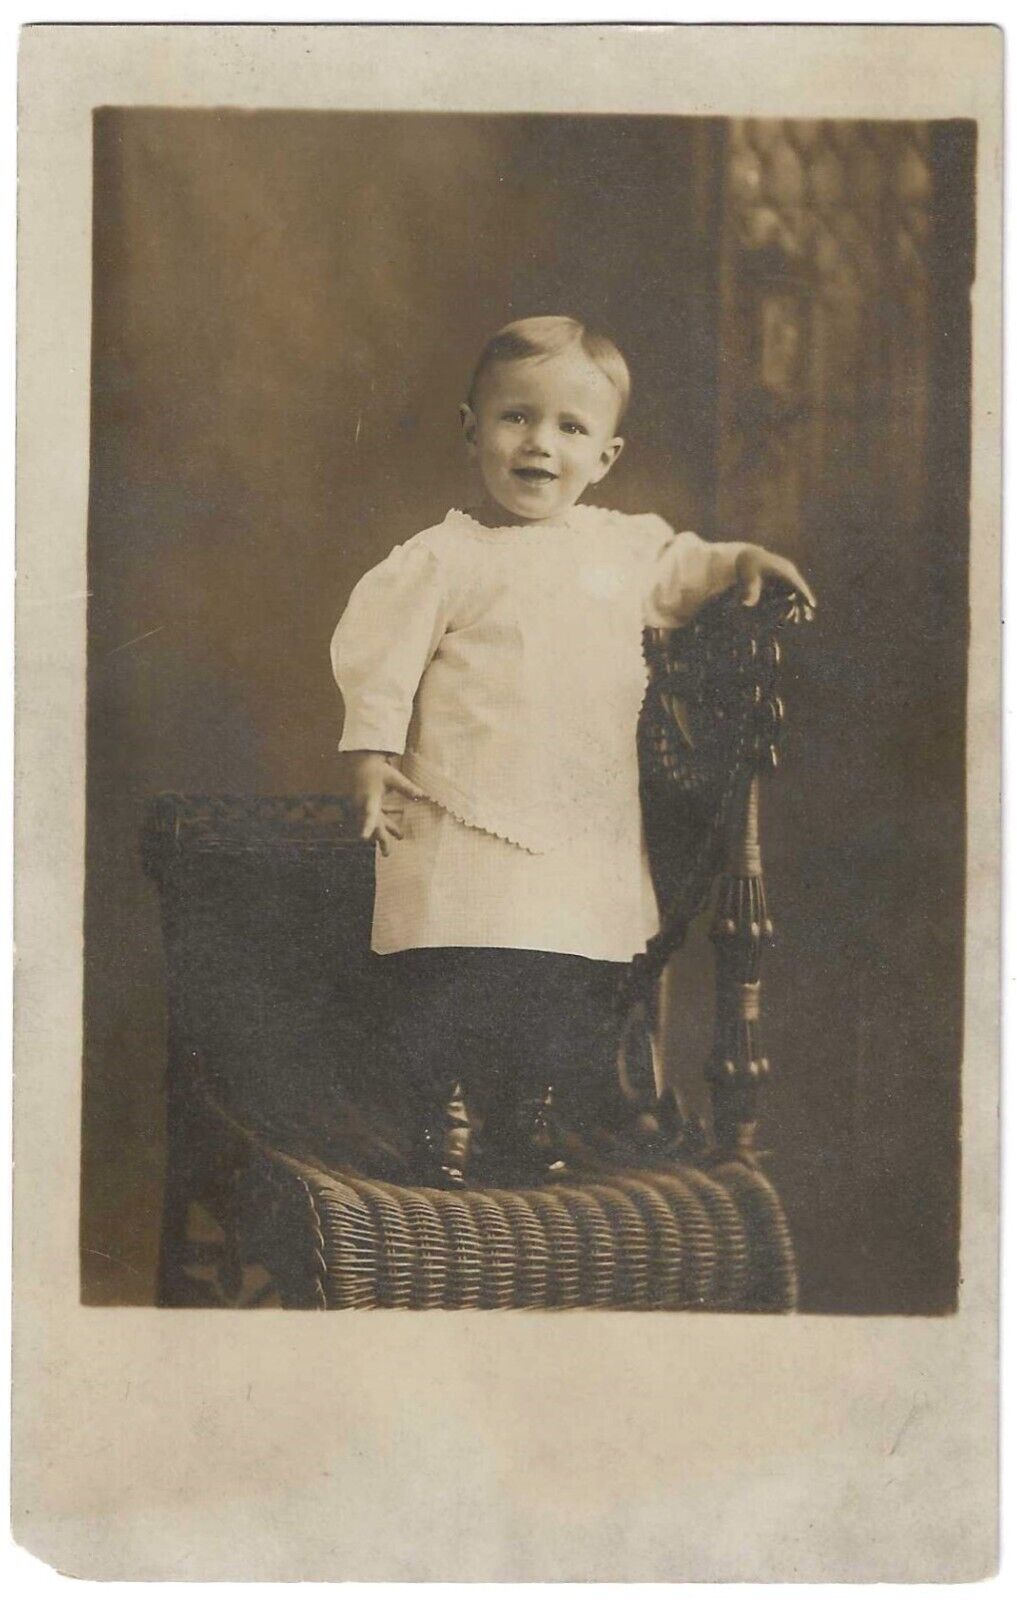 RPPC Postcard Smiling Small Child on Chair, Real Photo Studio Portrait